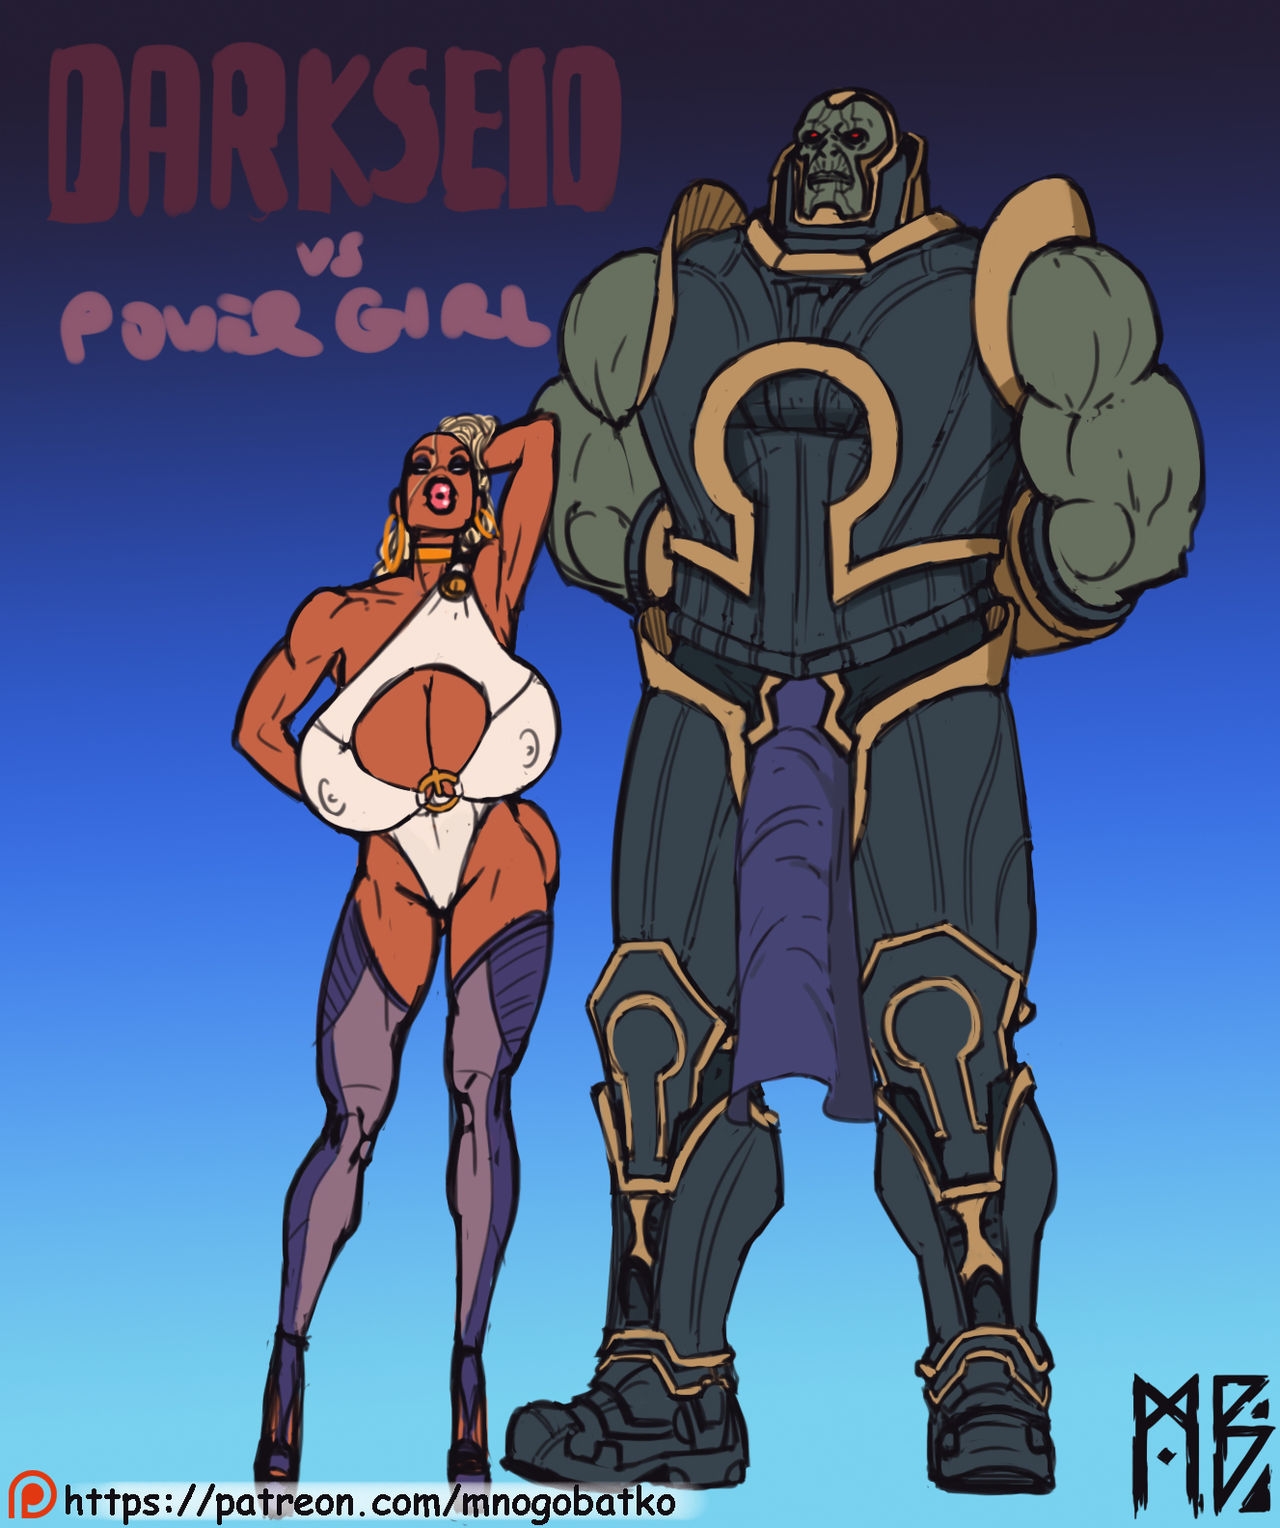 [Mnogobatko] Darkseid vs Powergirl: The Ultimatium (Justice League) [Ongoing] 4